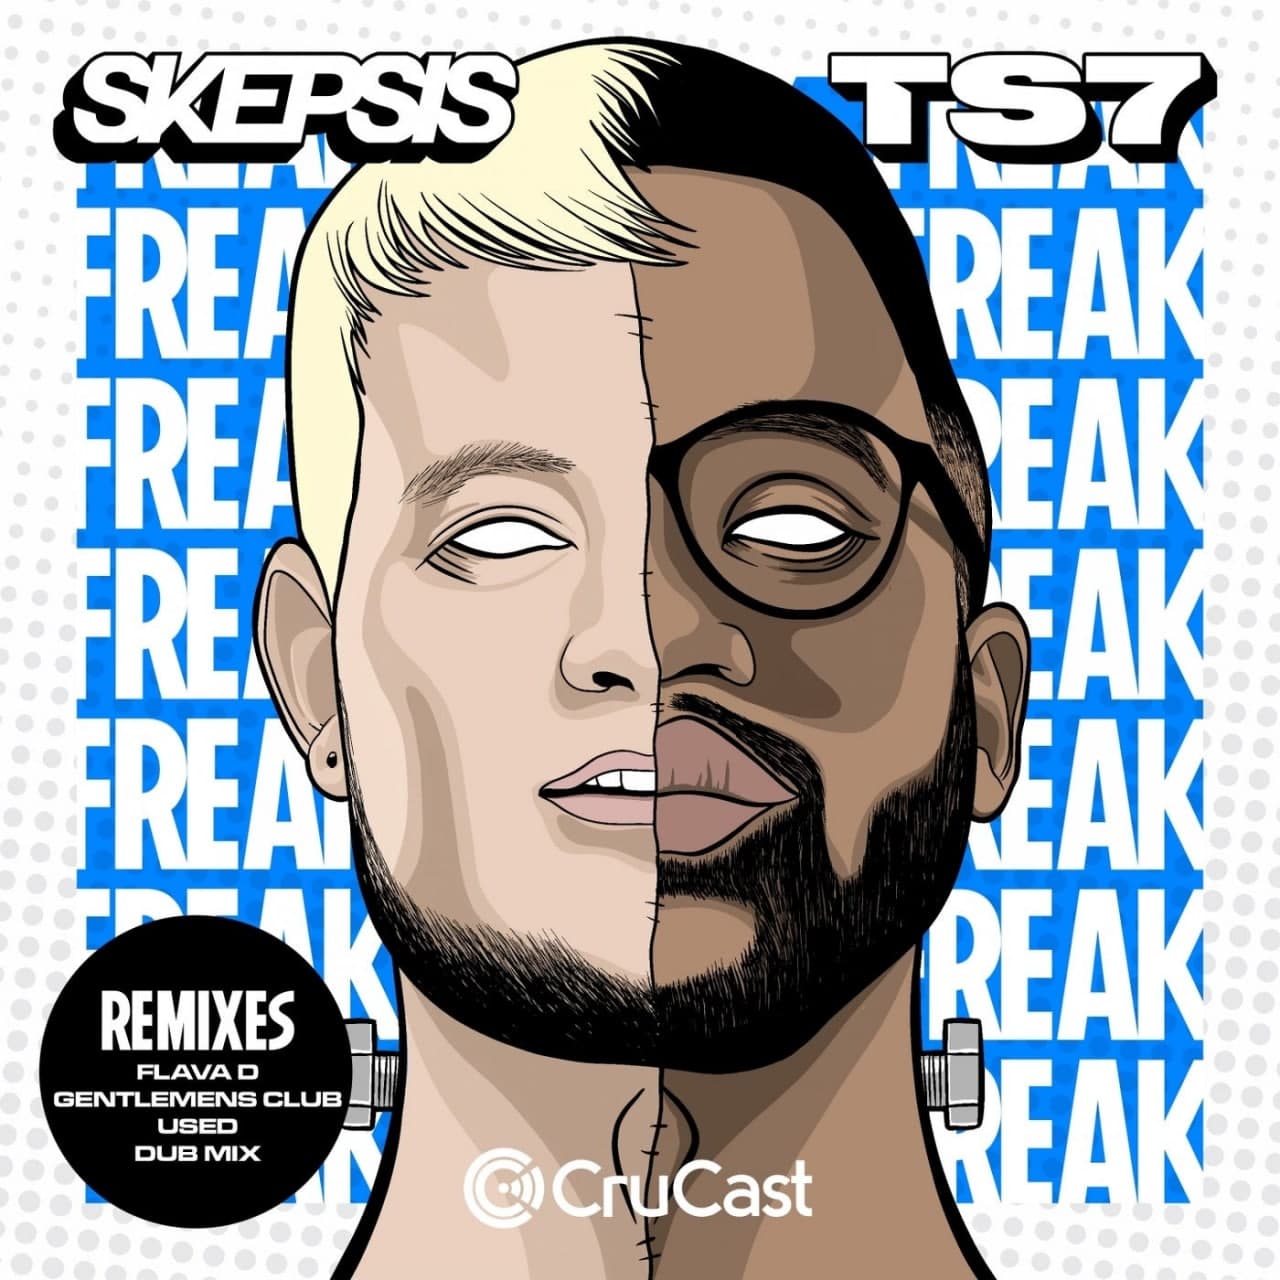 TS7 & Skepsis - Freak (Used Remix)